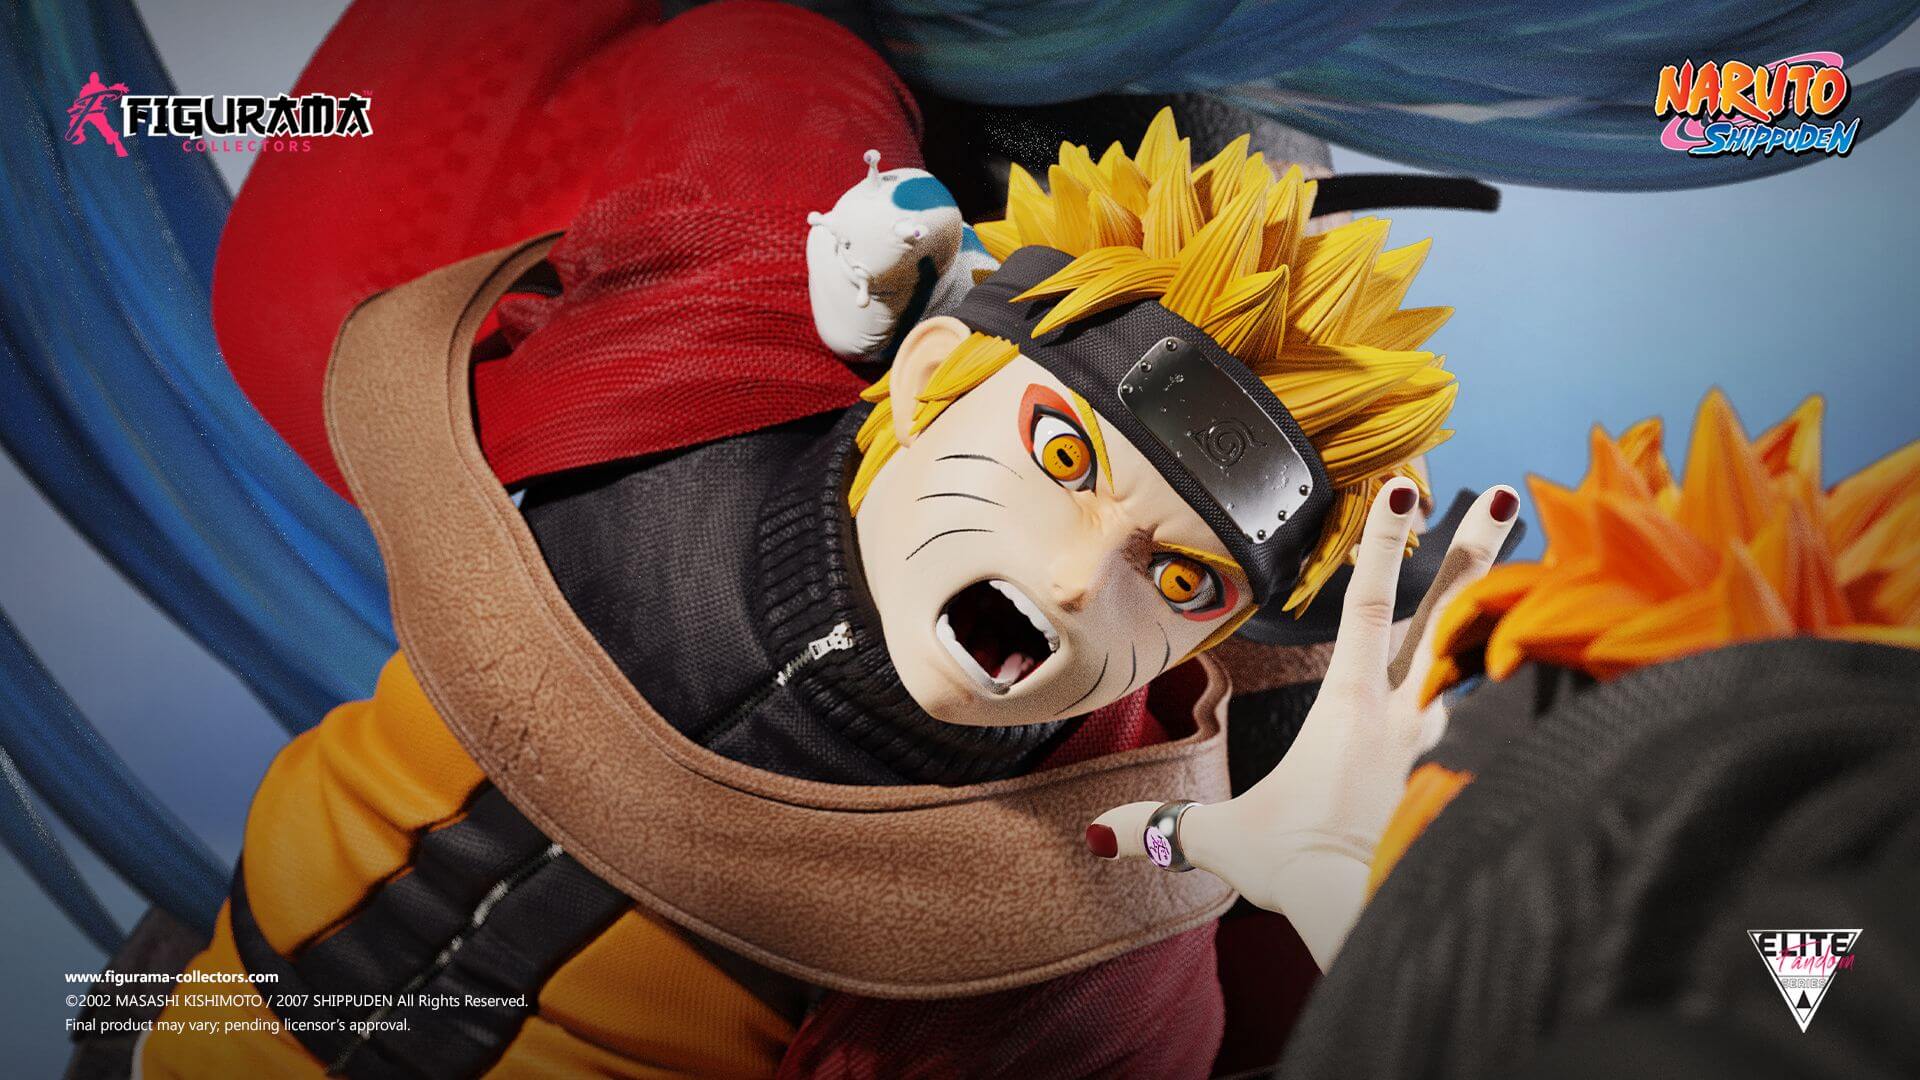 Figurama Naruto vs Pain Elite Fandom Statue